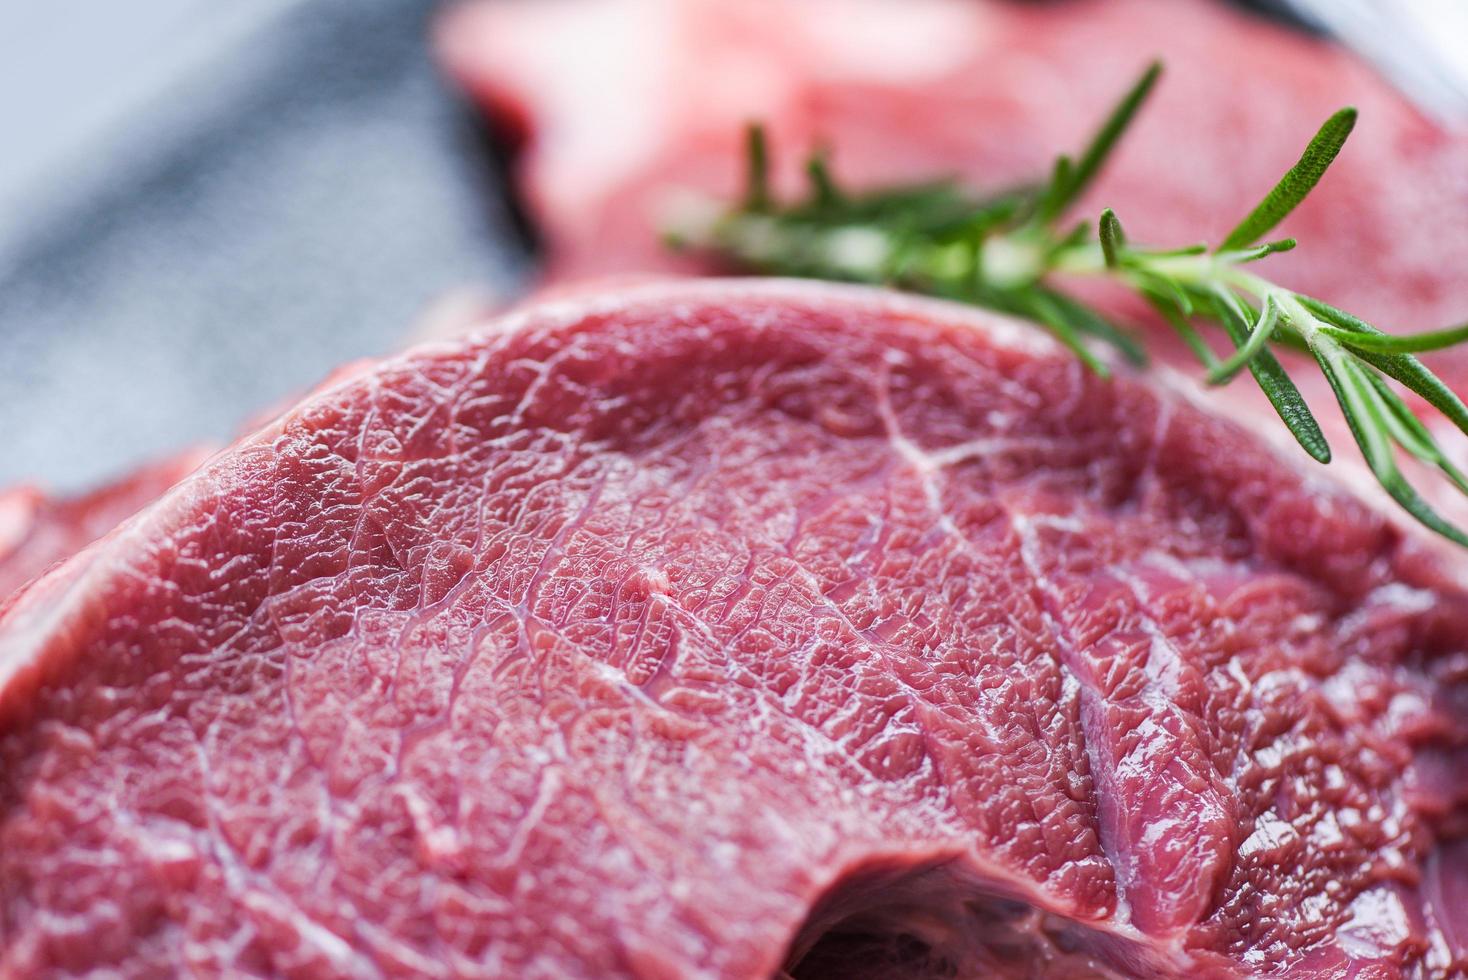 Carne de res fresca proteína animal en rodajas cerca de detalles carne de vacuno cruda textura de fondo carne fresca con romero foto